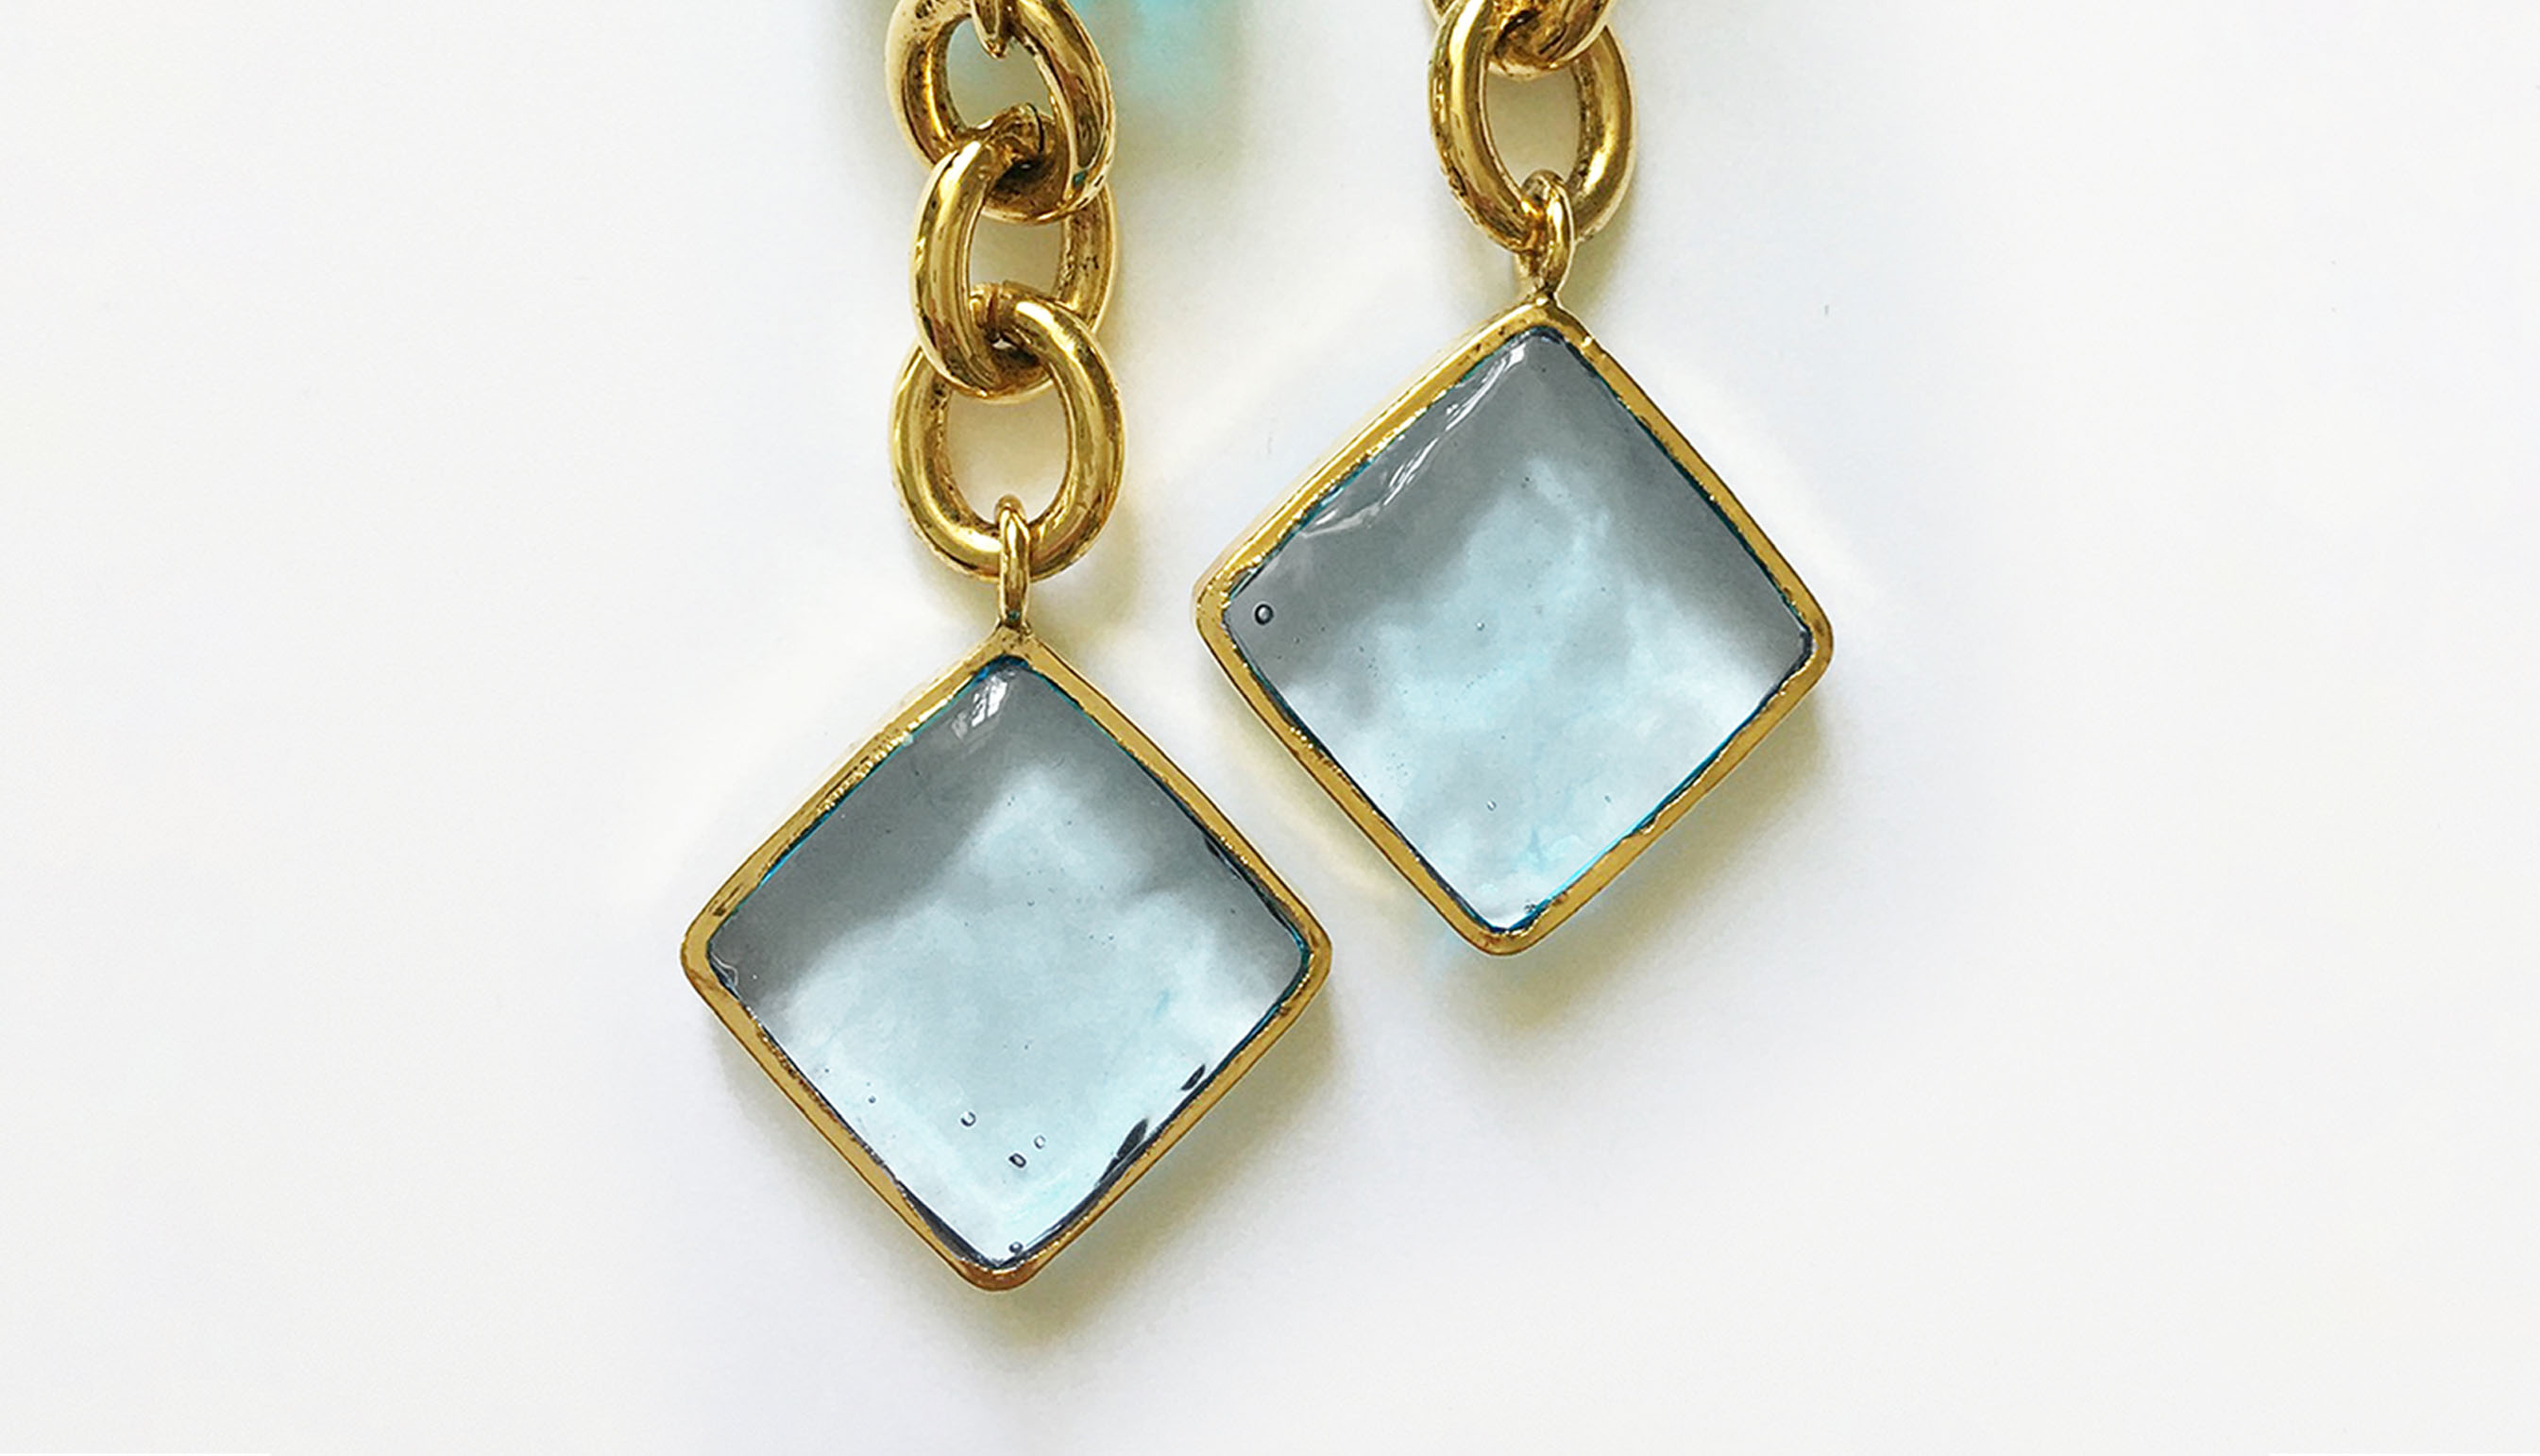 Pave & Diamond Three Link Clip Earrings, Aqua